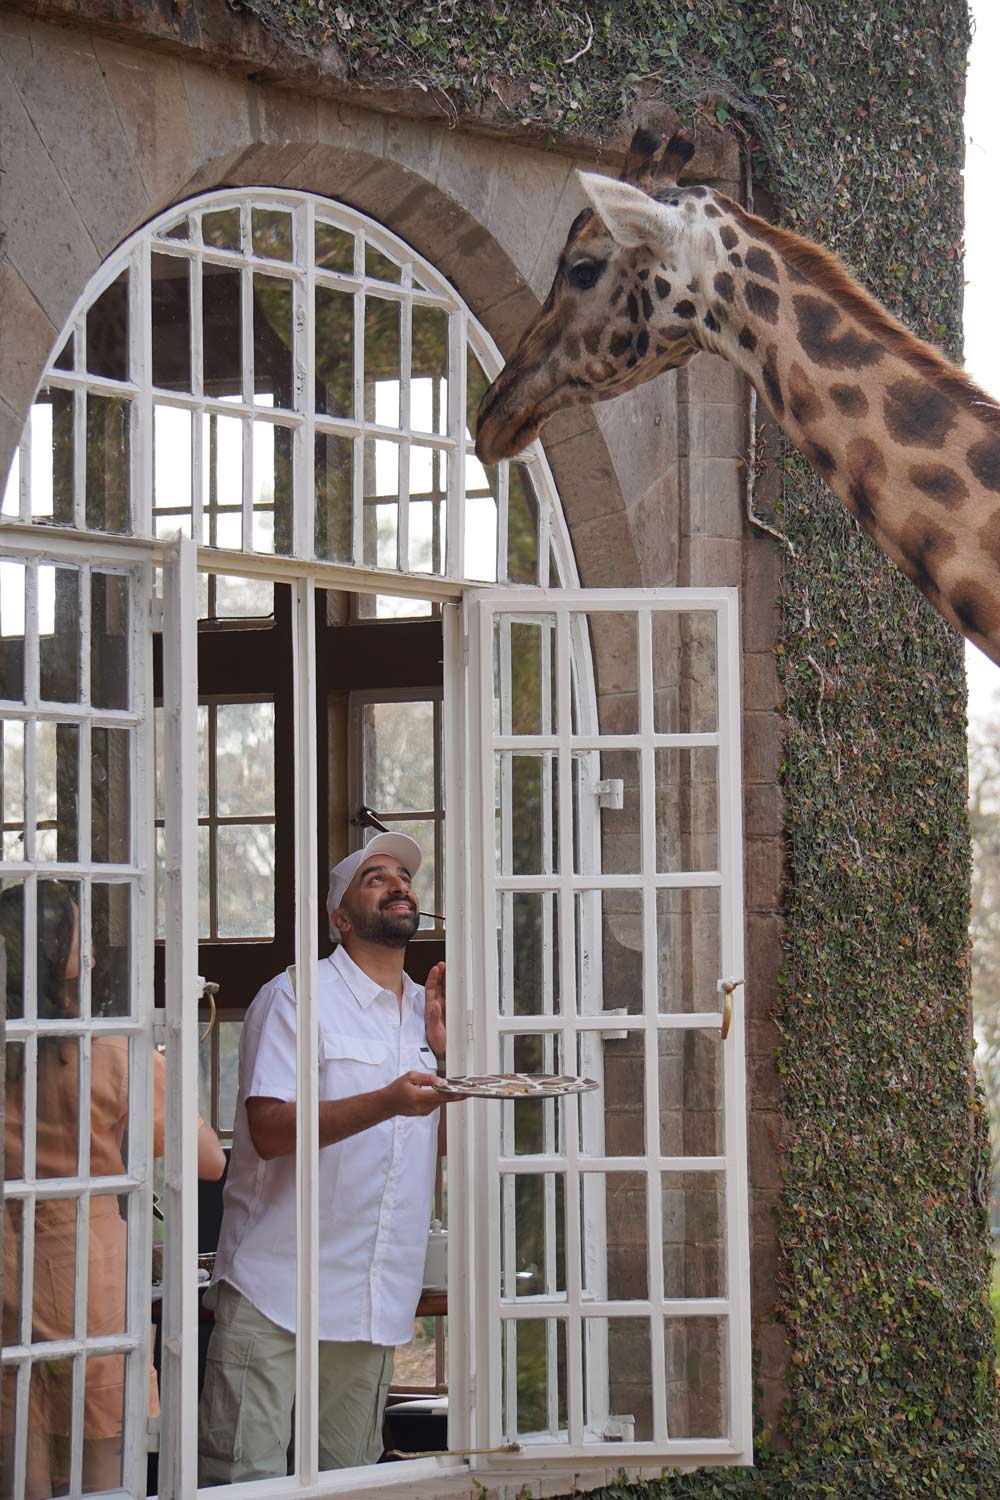 feeding the giraffes